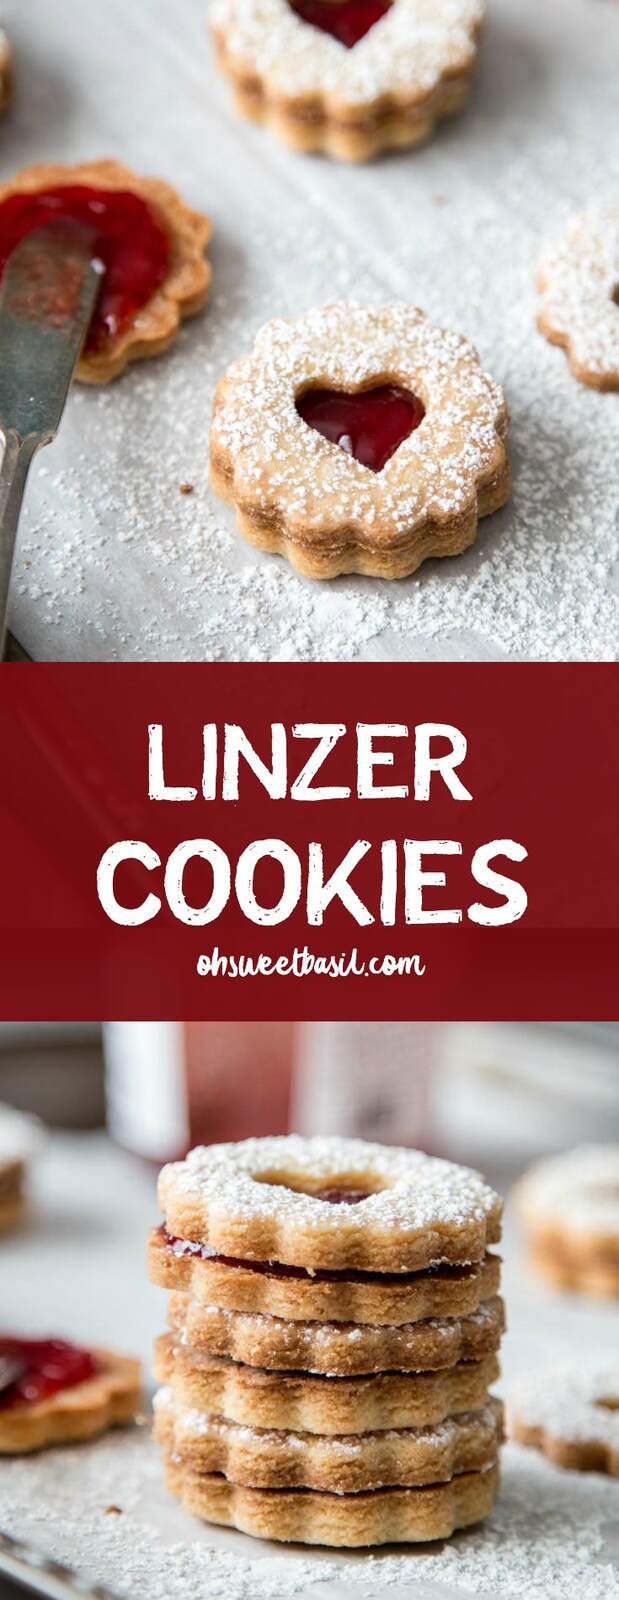 Linzer-Cookies-ohsweetbasil.com-1.jpg